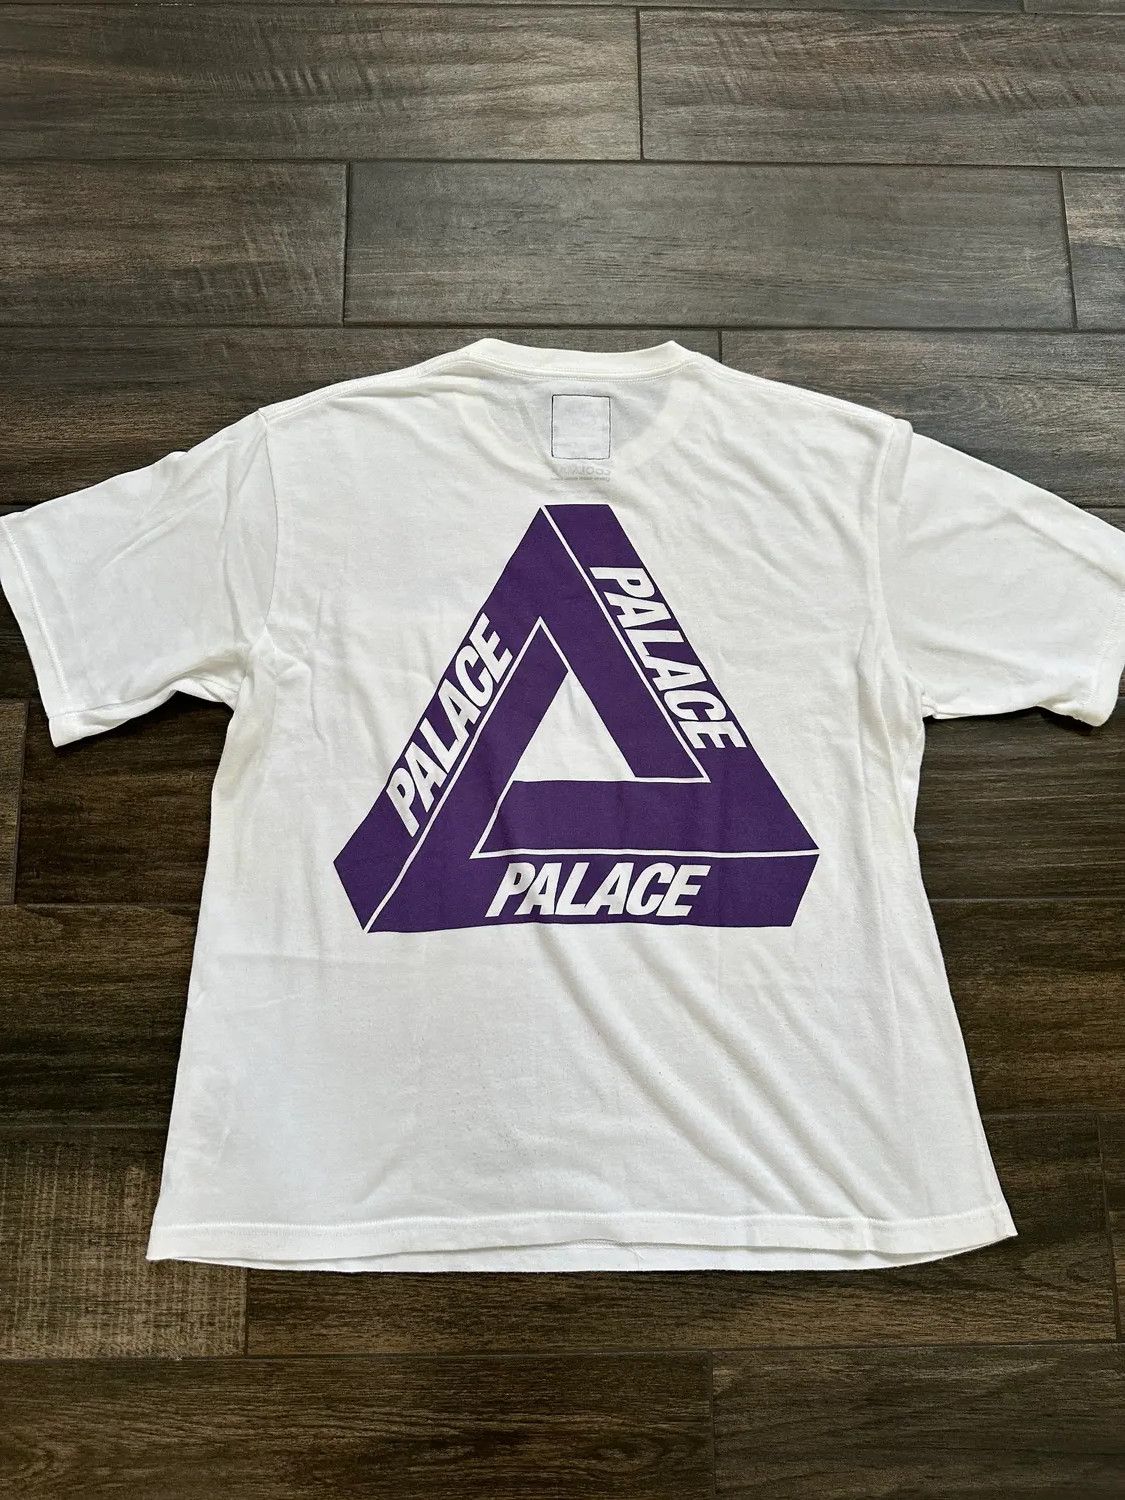 Palace Seoul Exclusive Tiger Tri-Ferg T-shirt Black